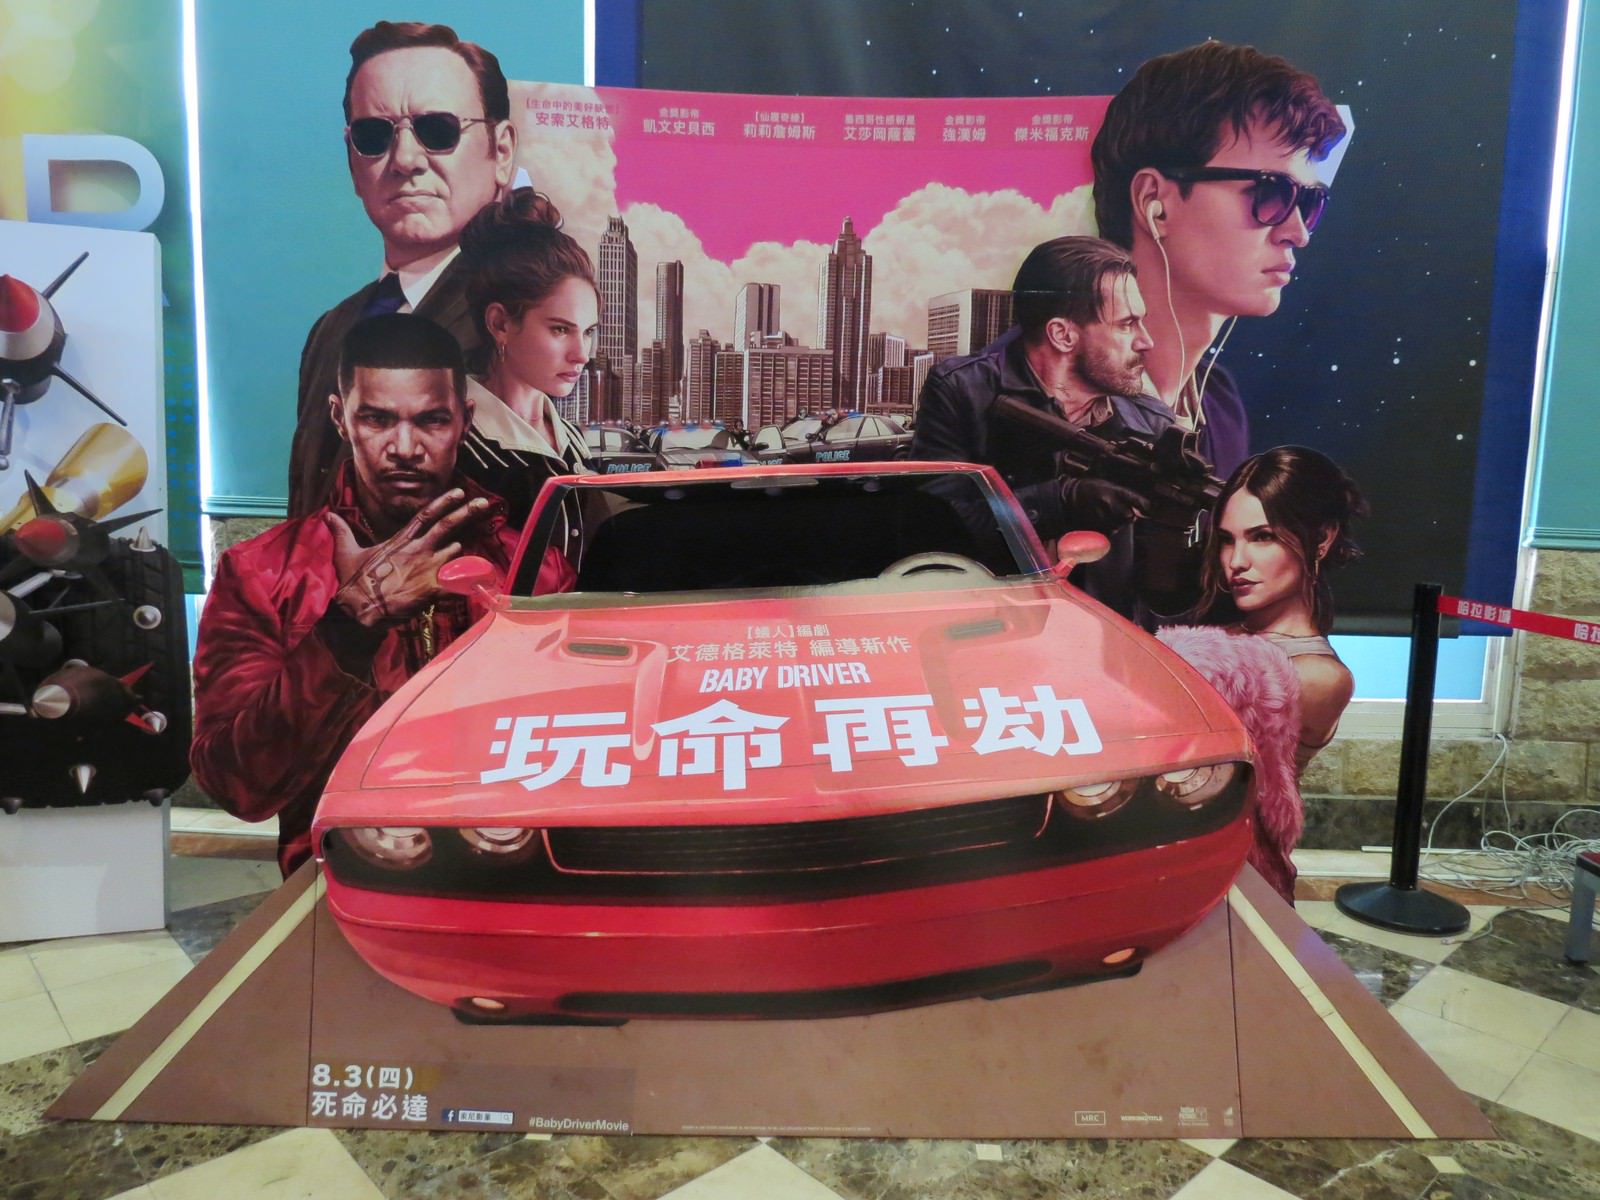 Movie, Baby Driver(美國, 2017年) / 玩命再劫(台灣) / 极盗车神(中國) / 寶貝車神(香港), 廣告看板, 哈拉影城